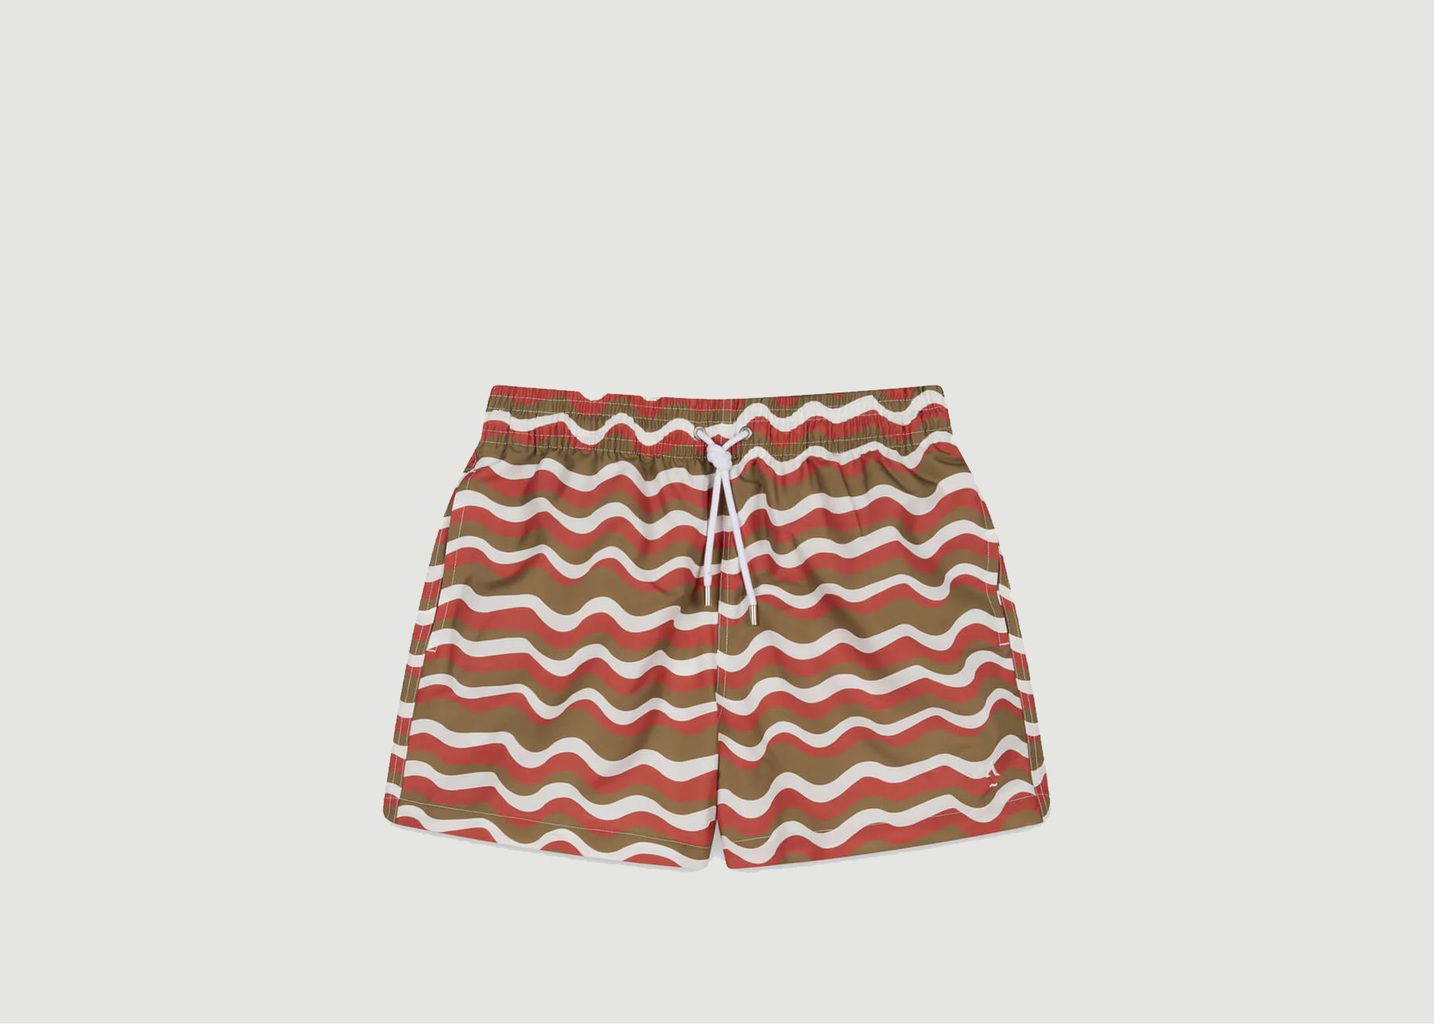 Mondello swim shorts - Apnee